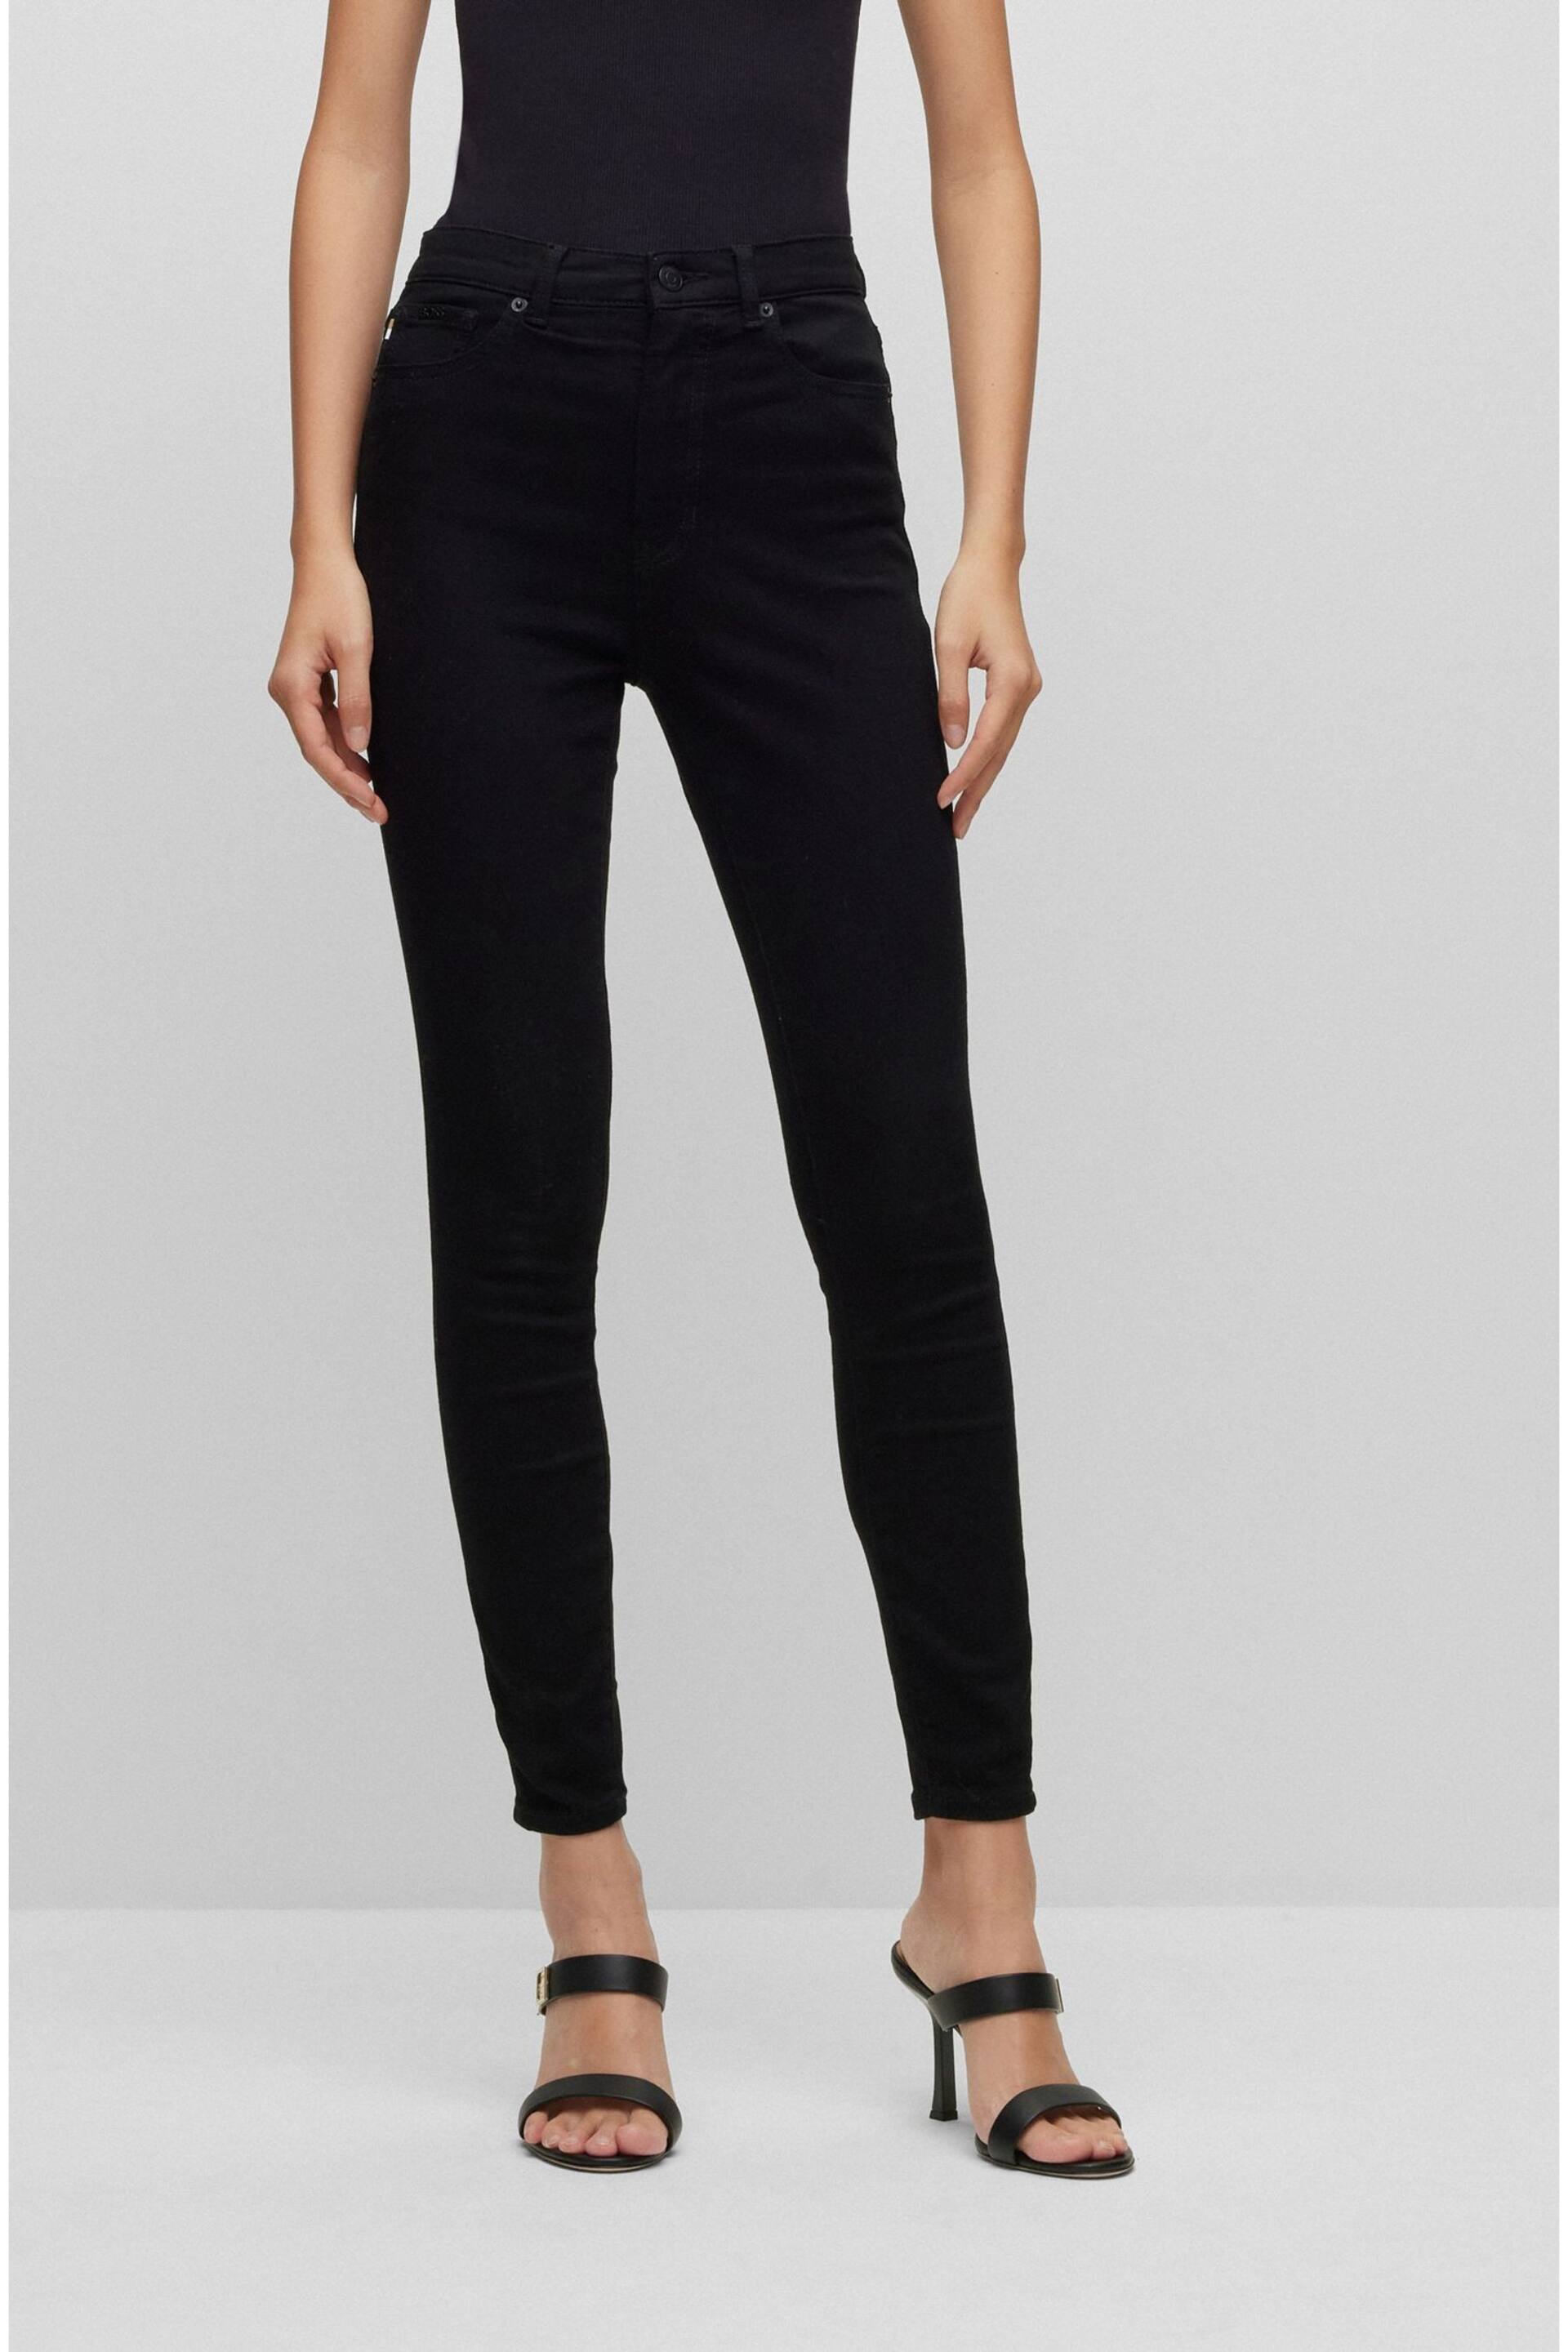 BOSS Black Maye Slim Stretch Jeans - Image 1 of 6